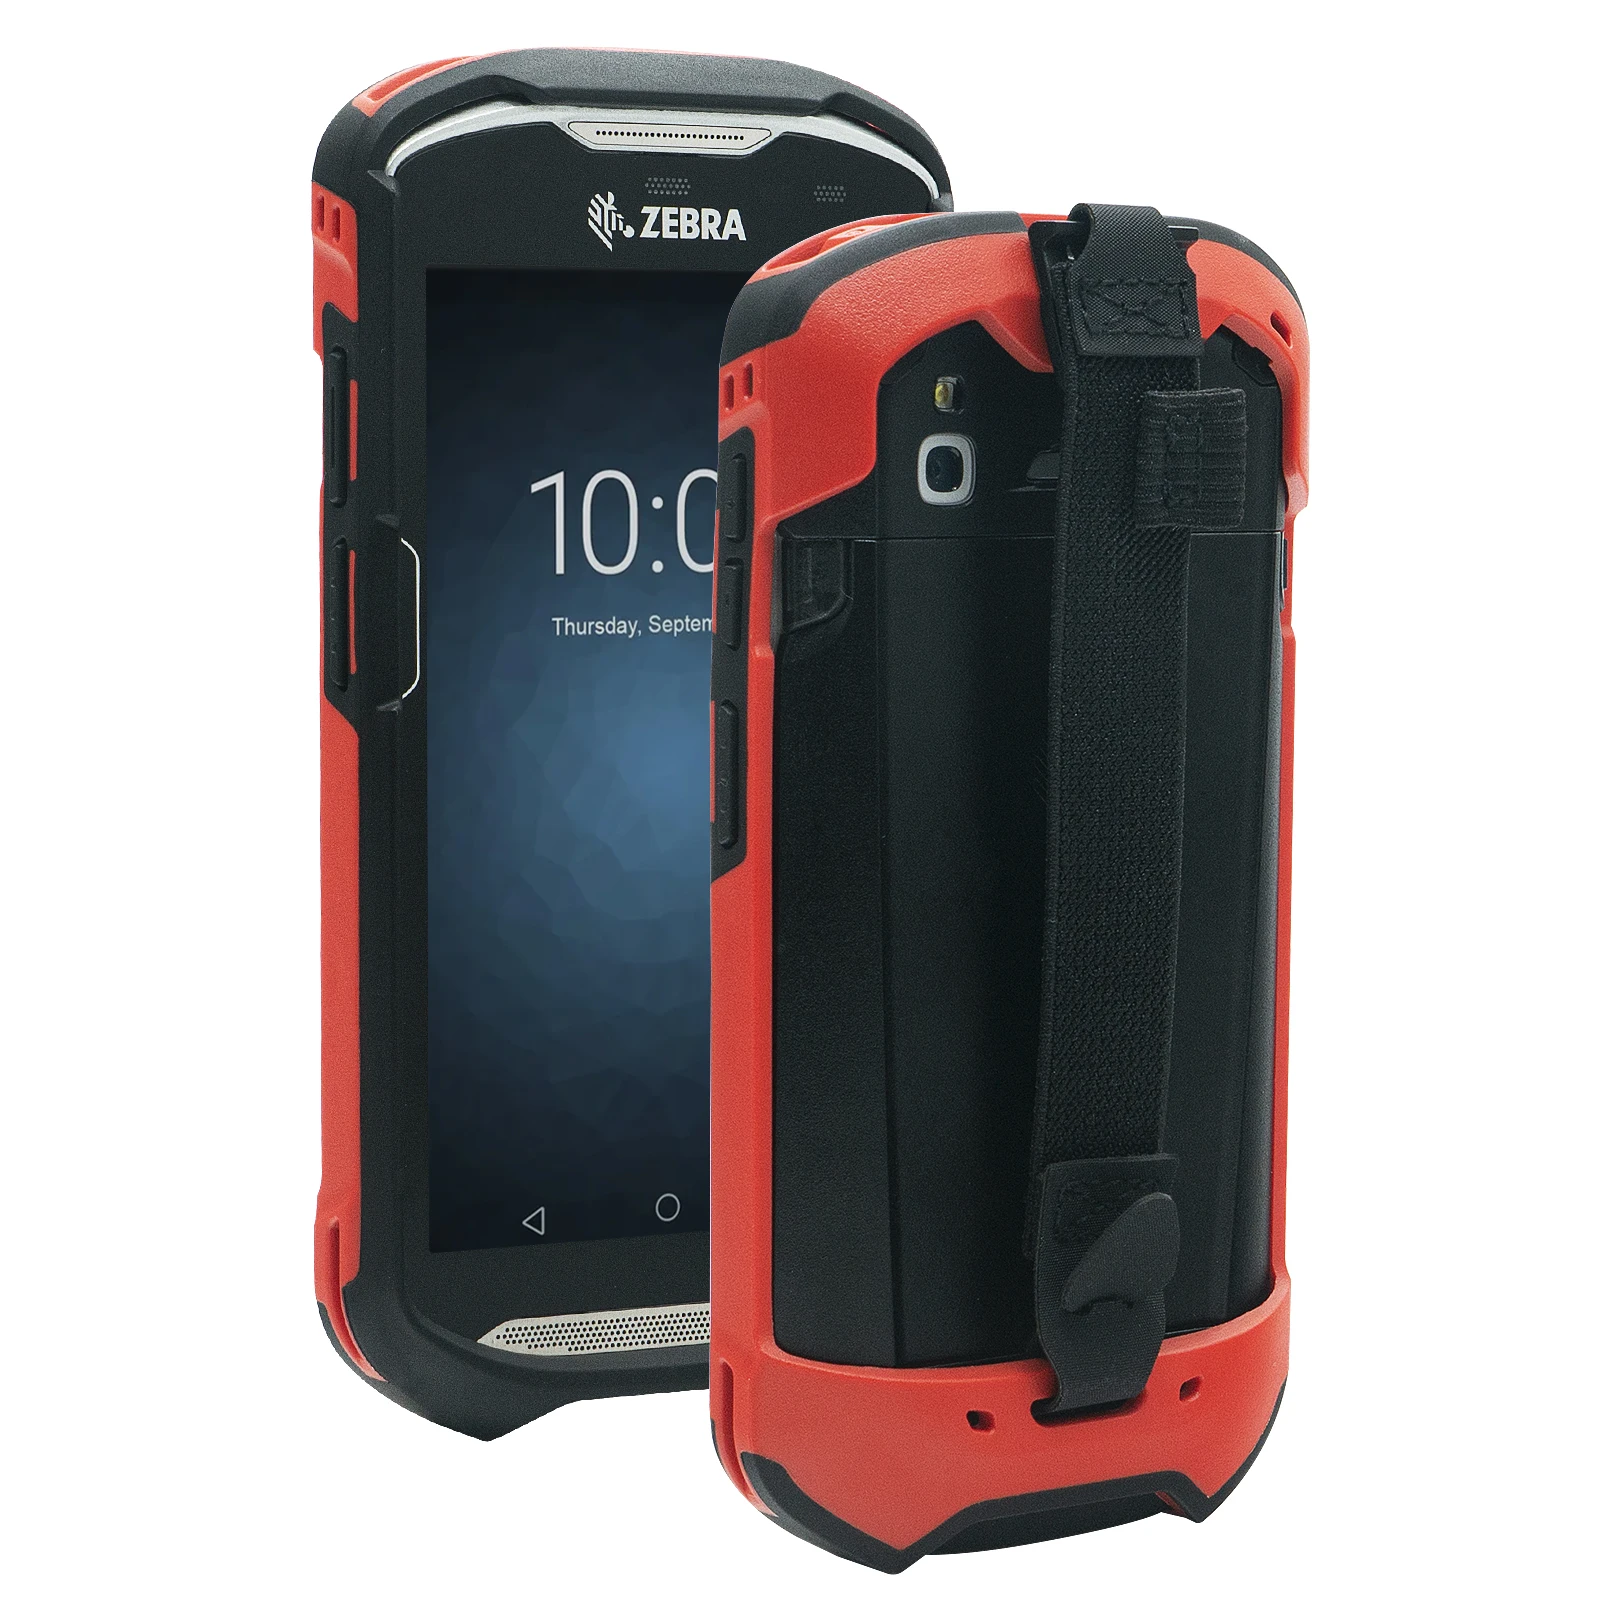 Protective Cover Case Hand Rugged Boot for Motorola Symbol Zebra TC51 TC56  Chose